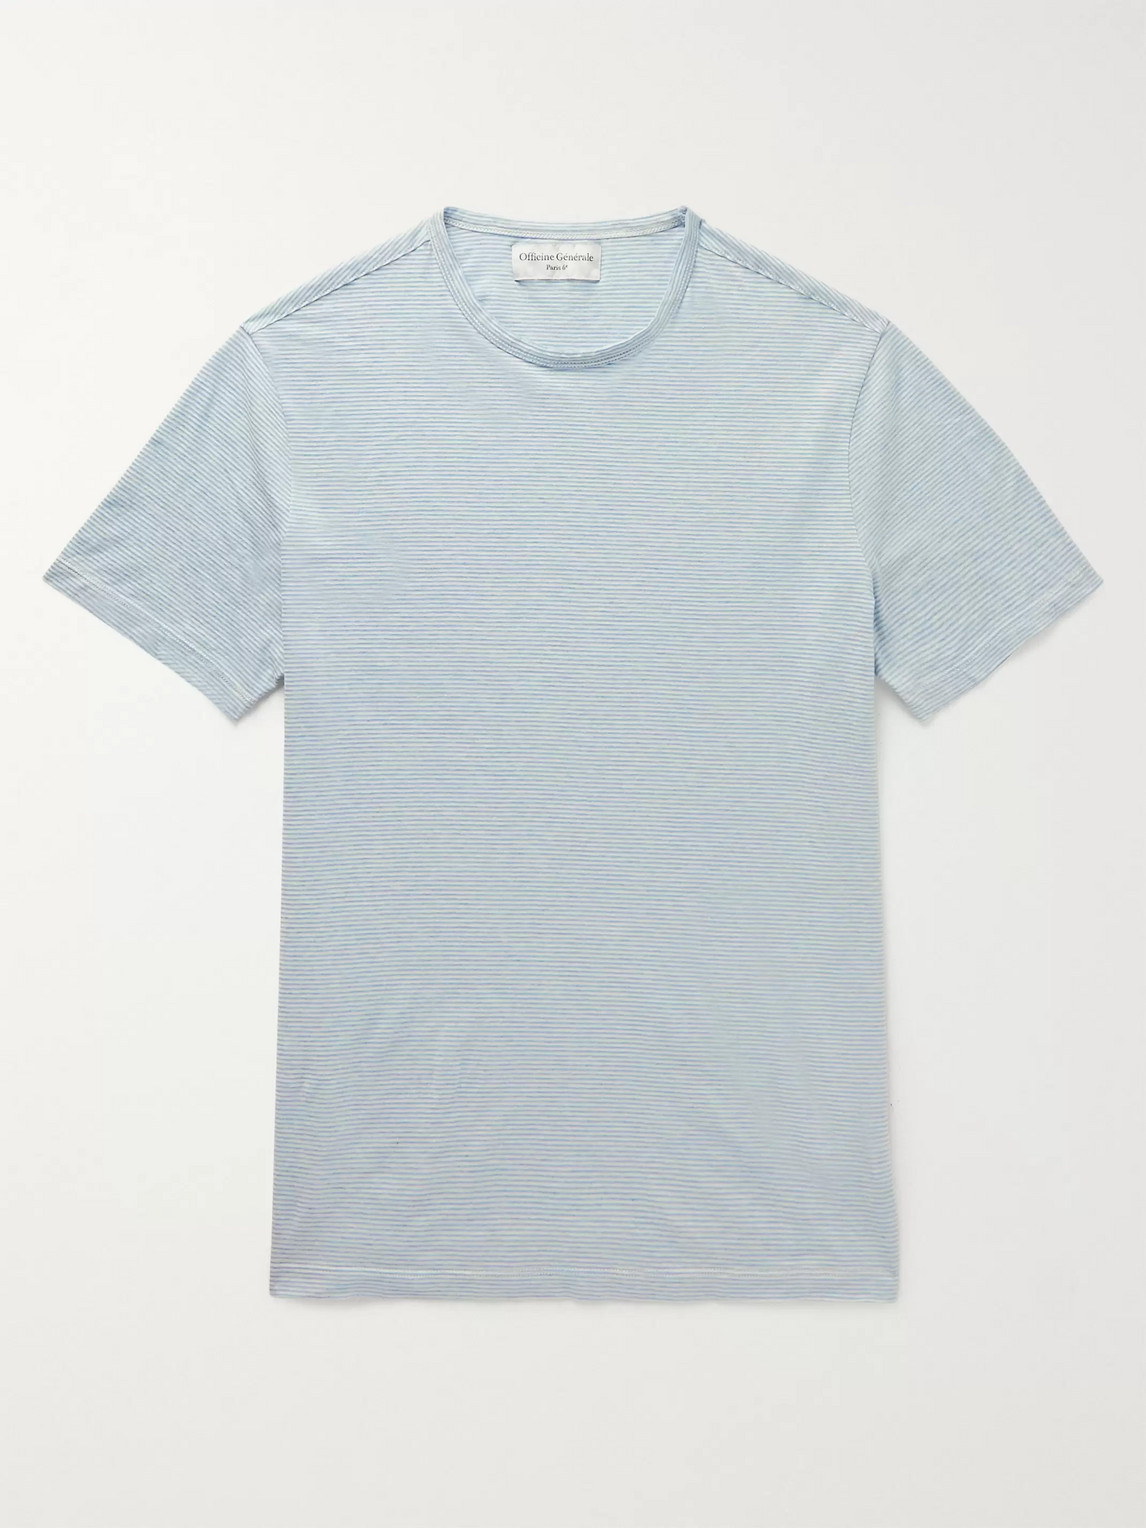 Officine Generale Striped Cotton-jersey T-shirt In Blue